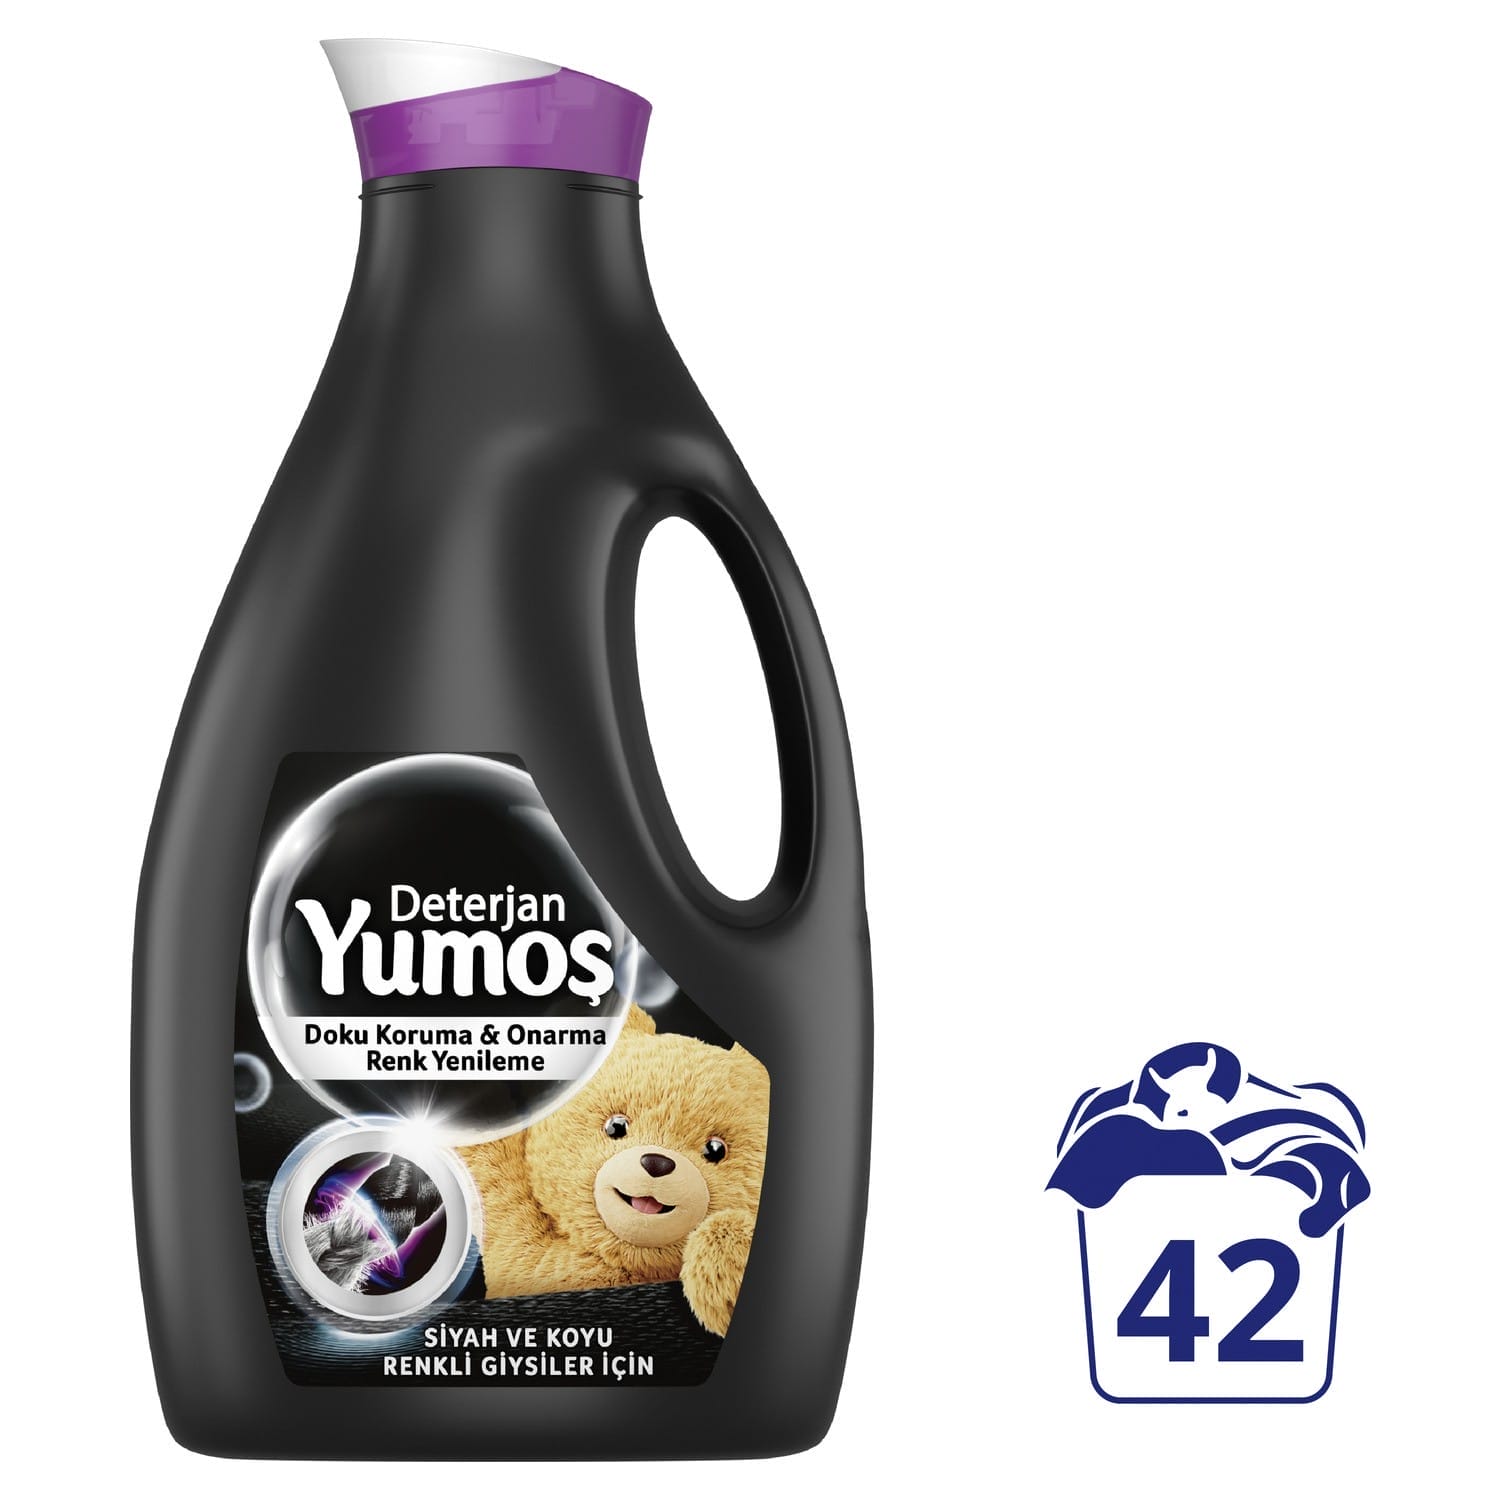  Yumoş Liquid Detergent For Black And Dark Clothes 2520 ml